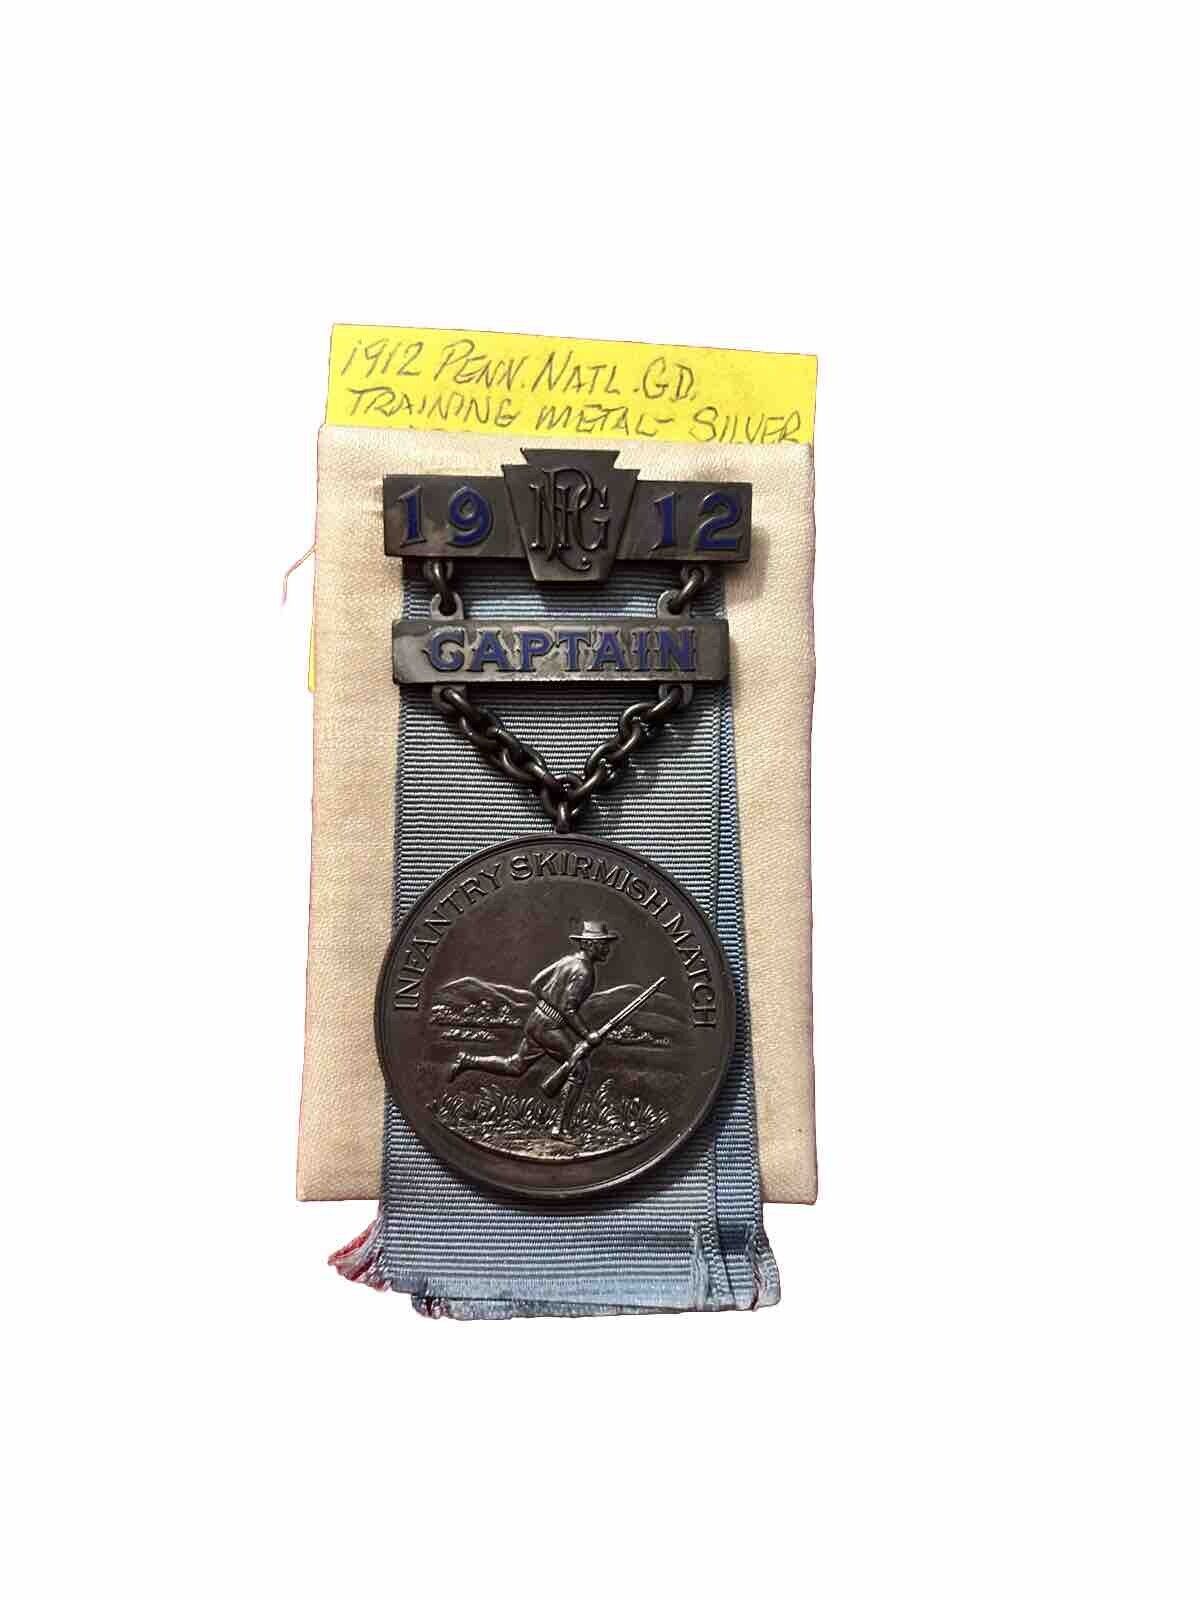 1912 Pennsylvania National Guard Captain Training Medal Silver